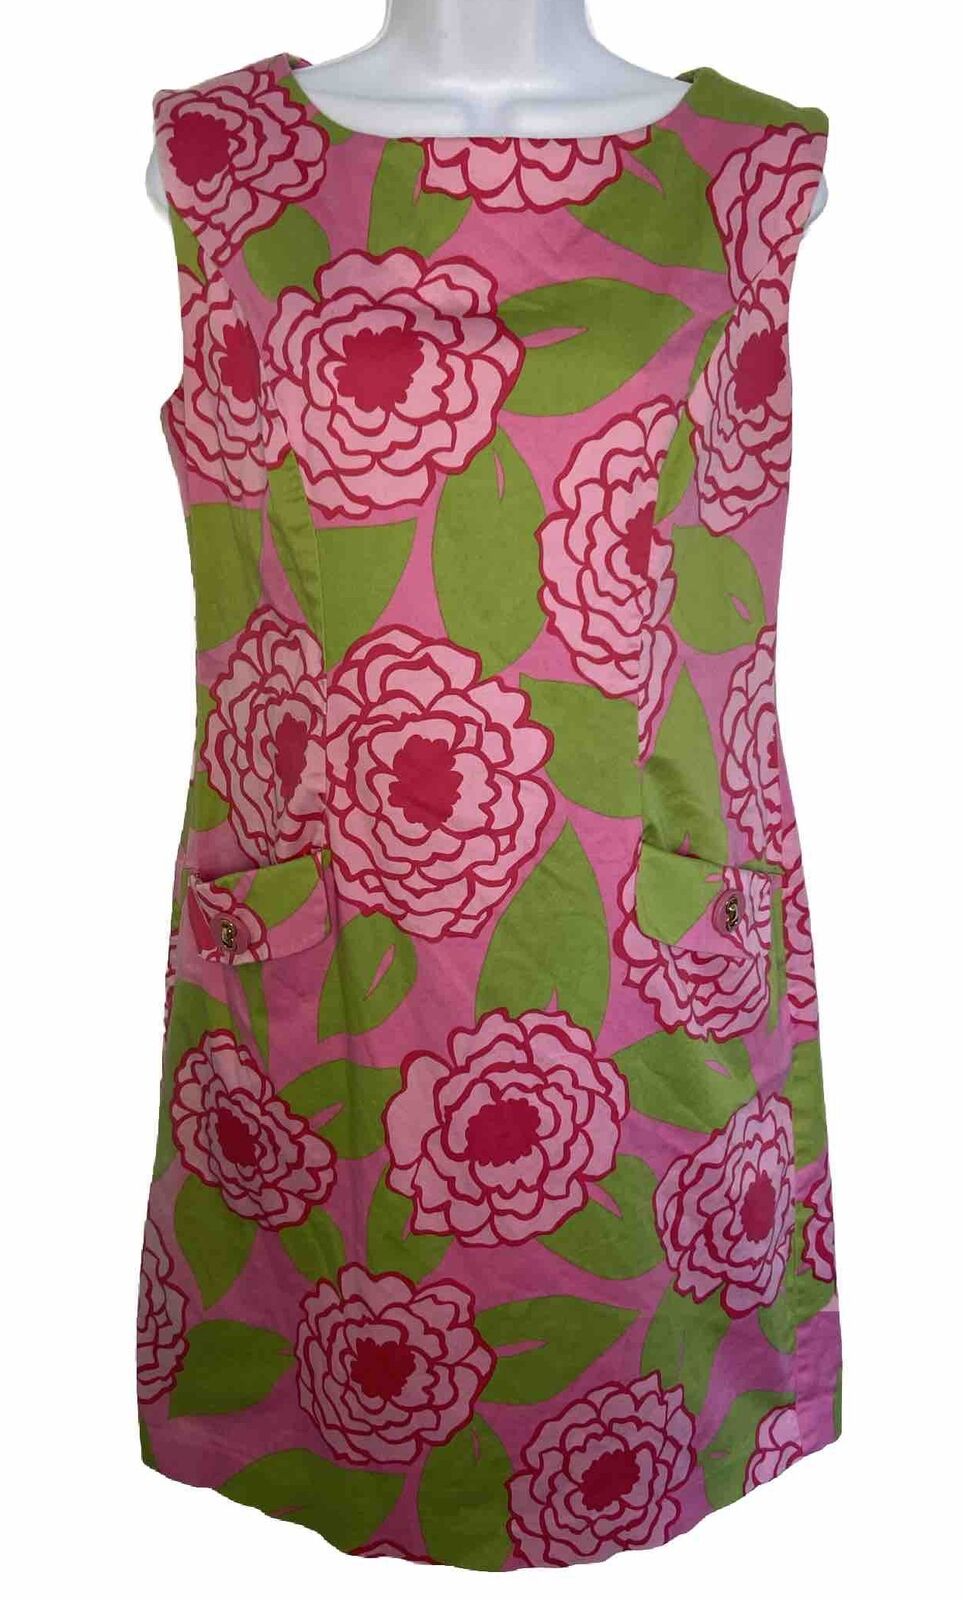 Pink Floral Spring Dress Cotton Retro Floral Sheath Pink Green Size M/L